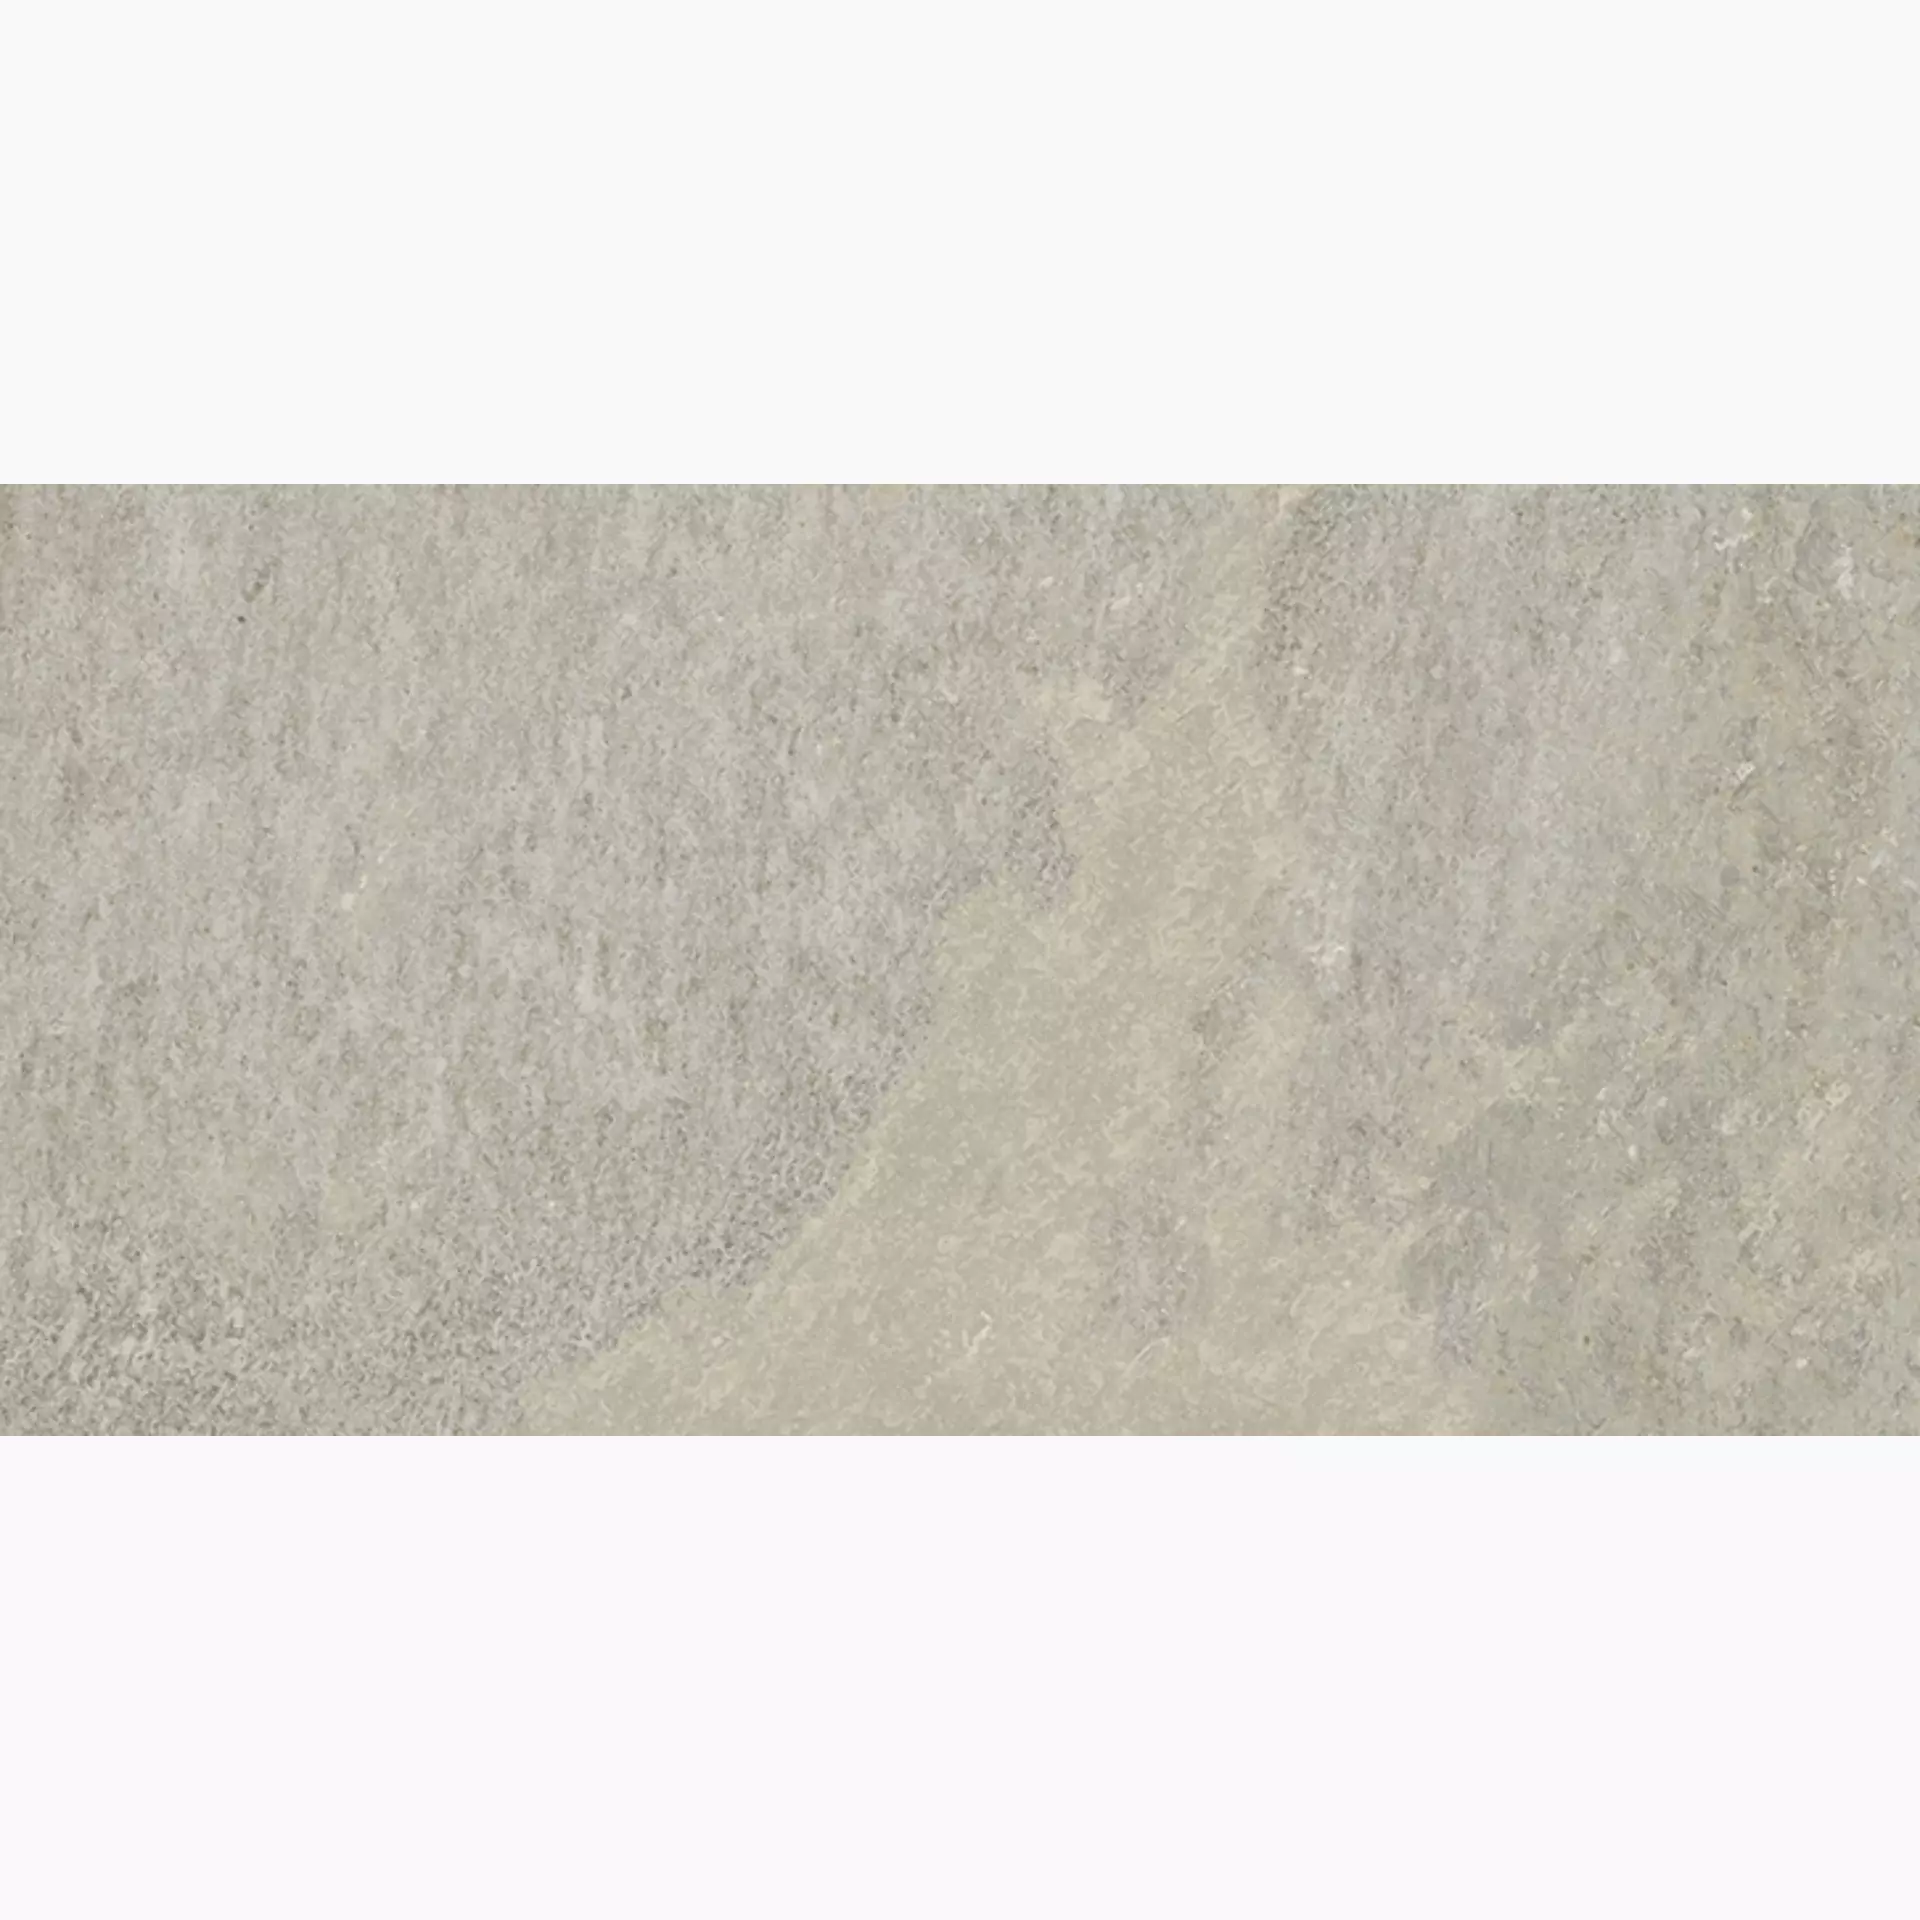 Sichenia Pave' Quarz Esterno Argento Grip 0006227 30x60cm rectified 10mm